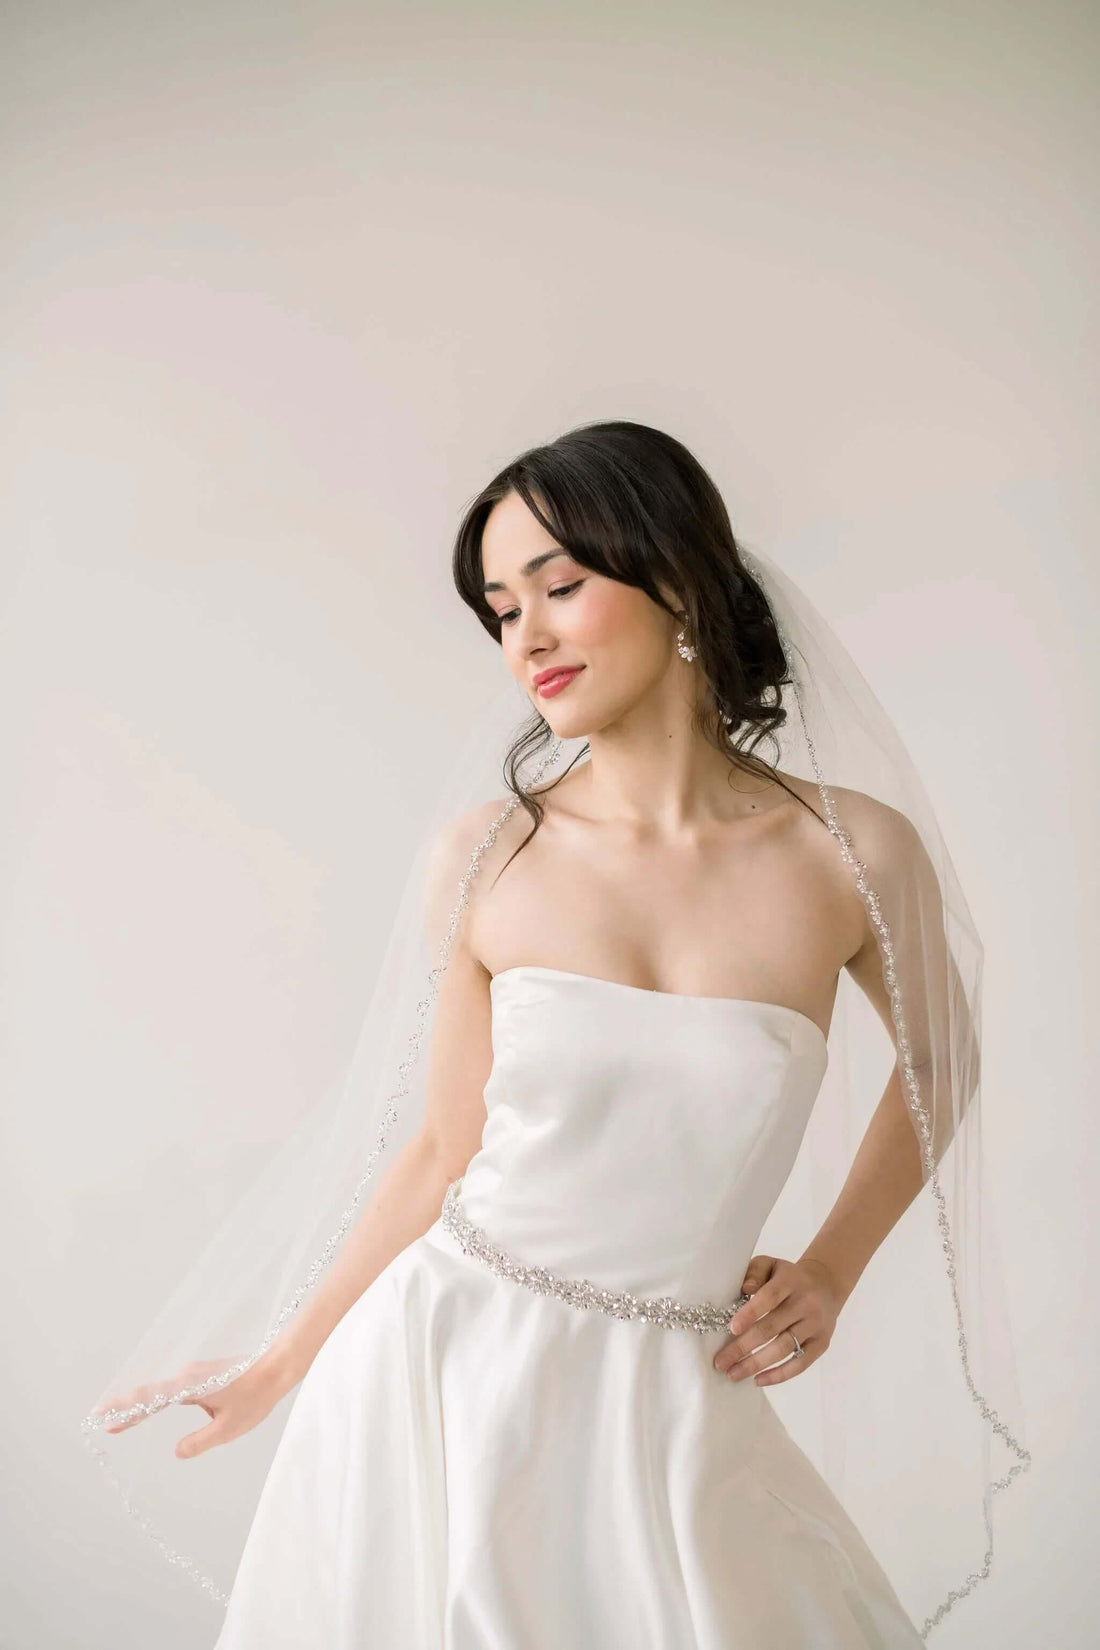 Wedding veil edging options and types advice Tessa Kim